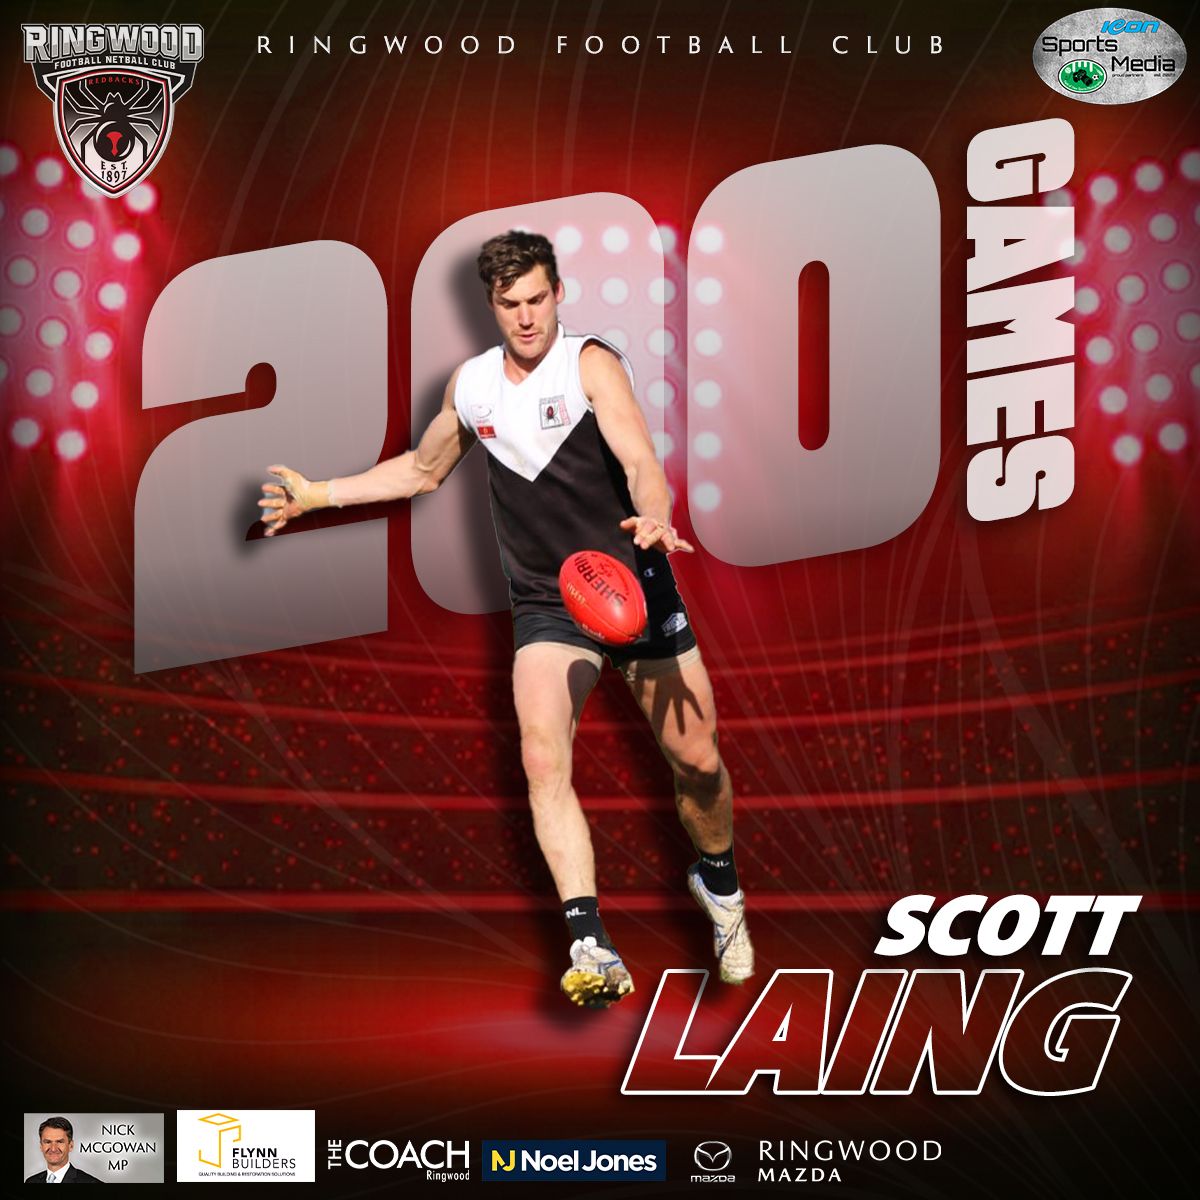 Scott Laing's 200th Senior Ringwood Game and Life Membership